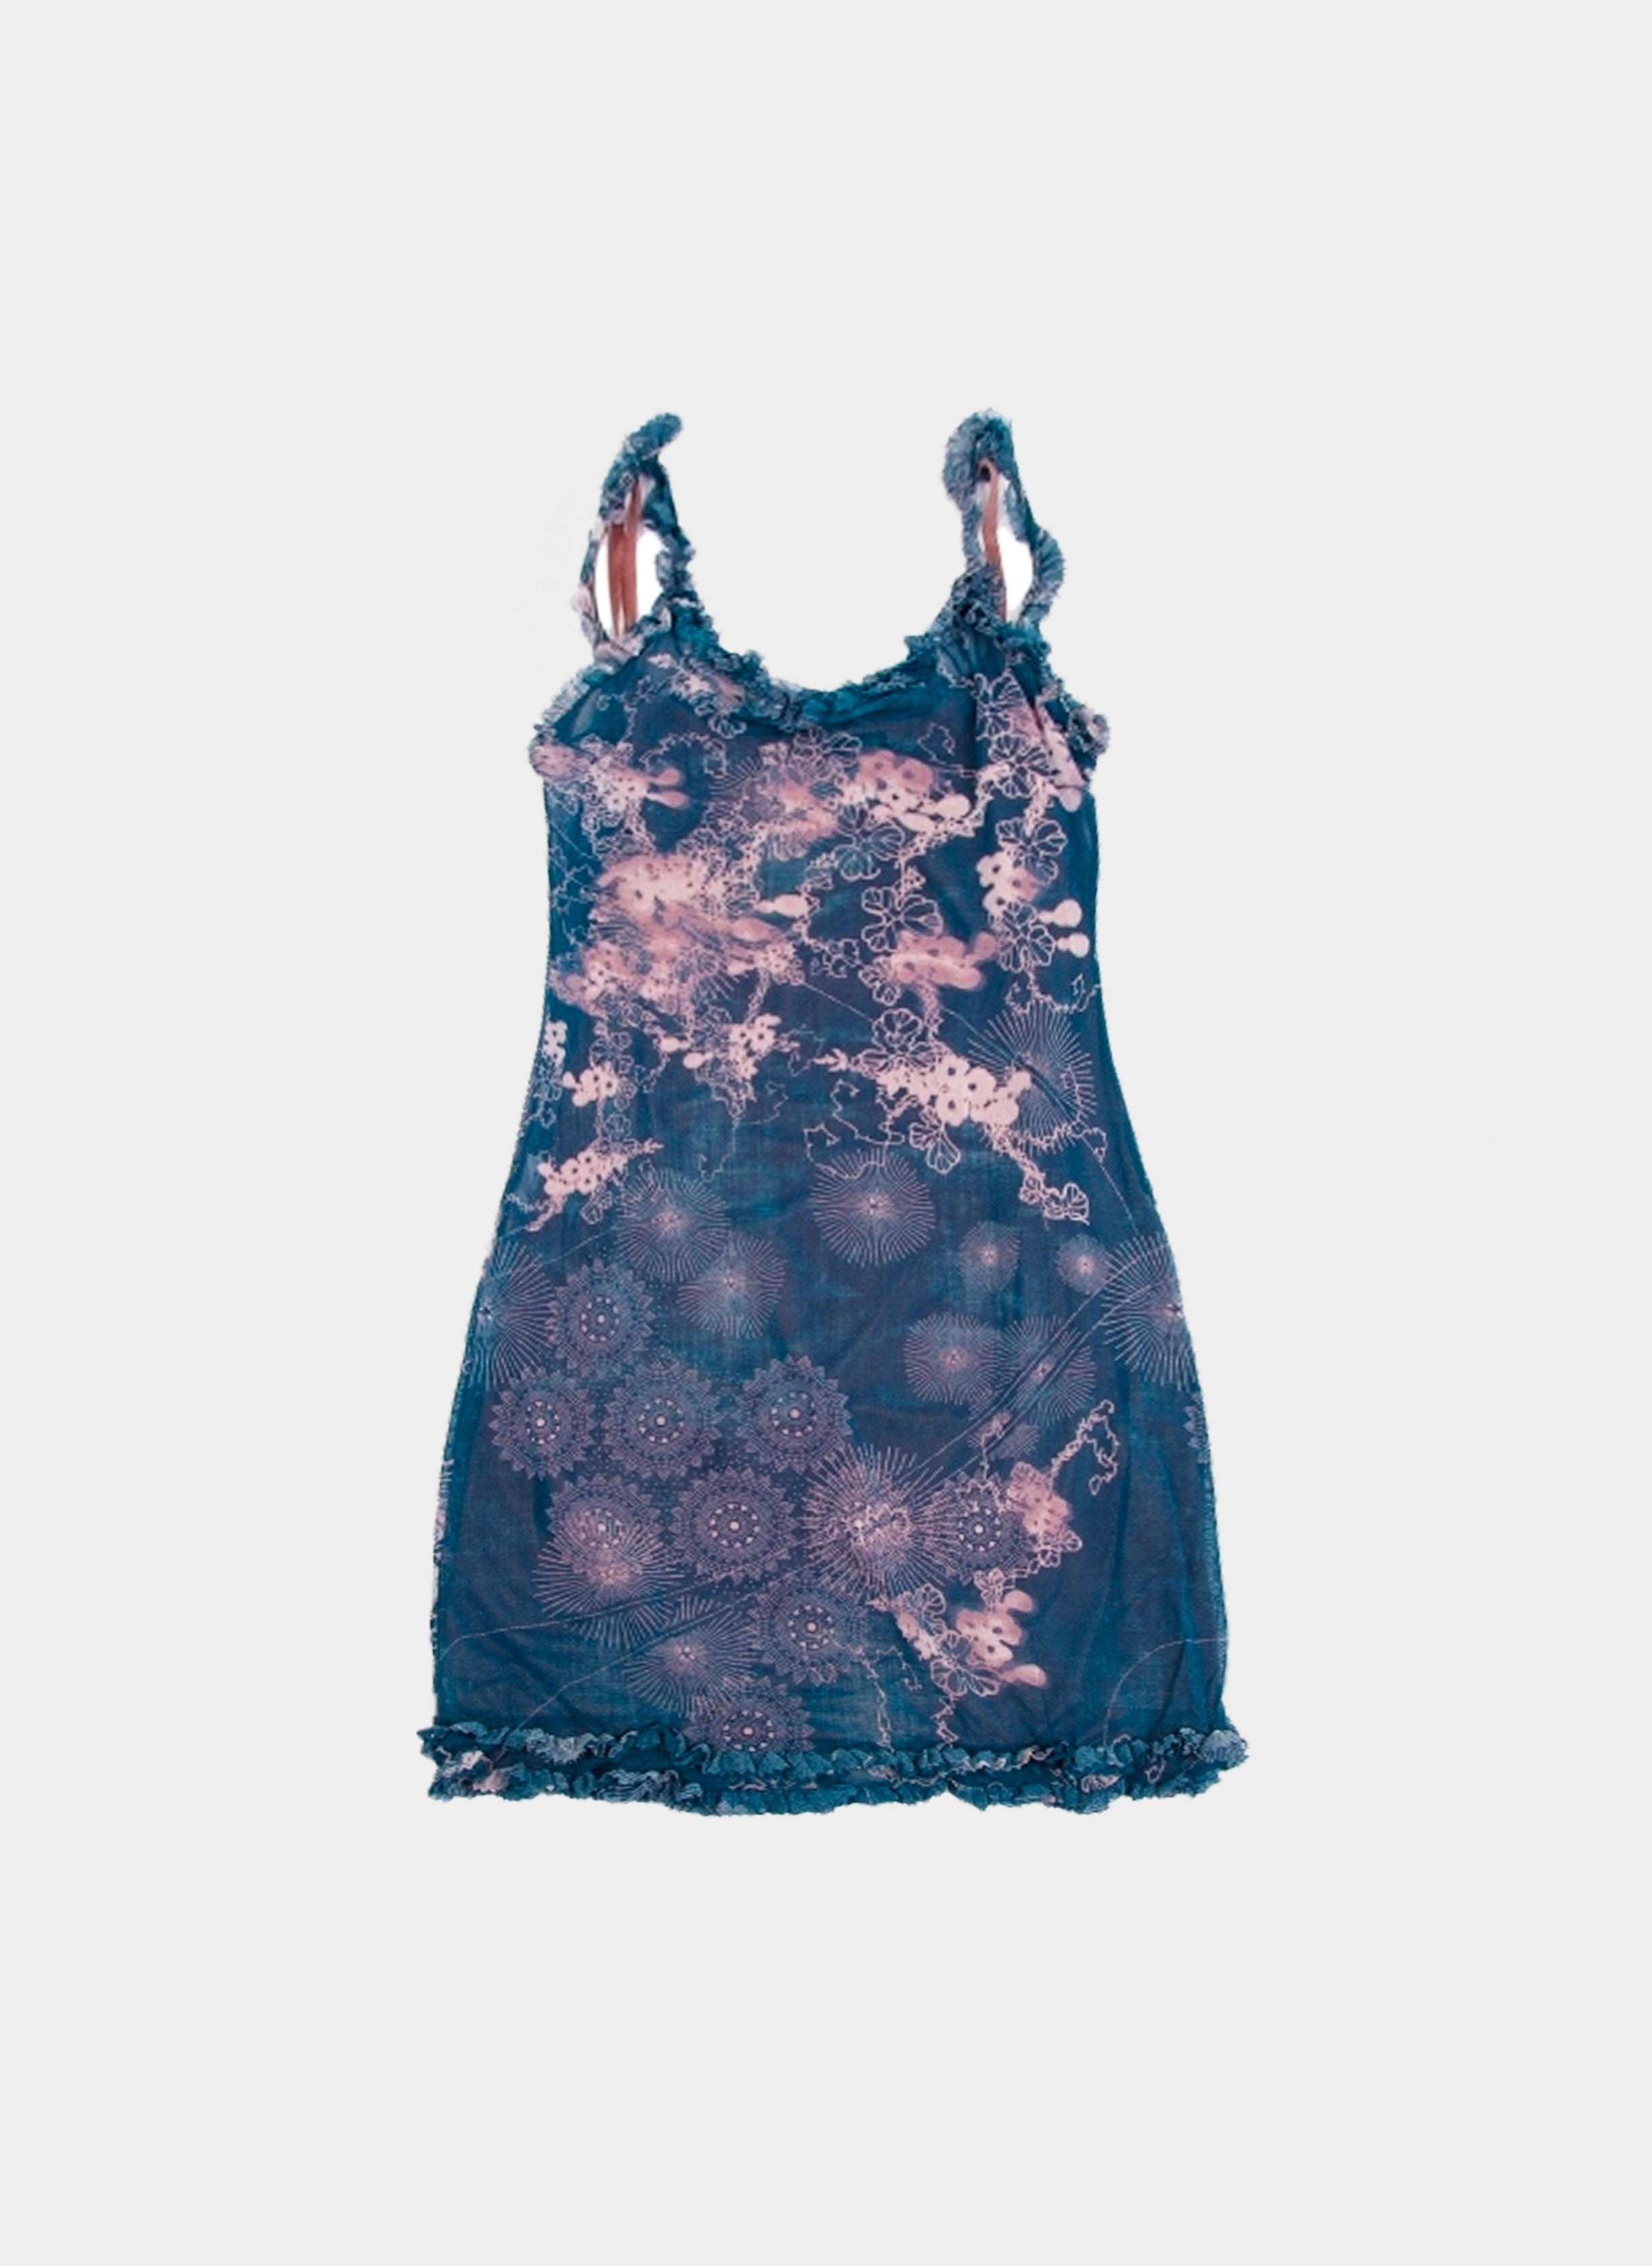 Jean Paul Gaultier 1990s Blue Floral Stretch Dress